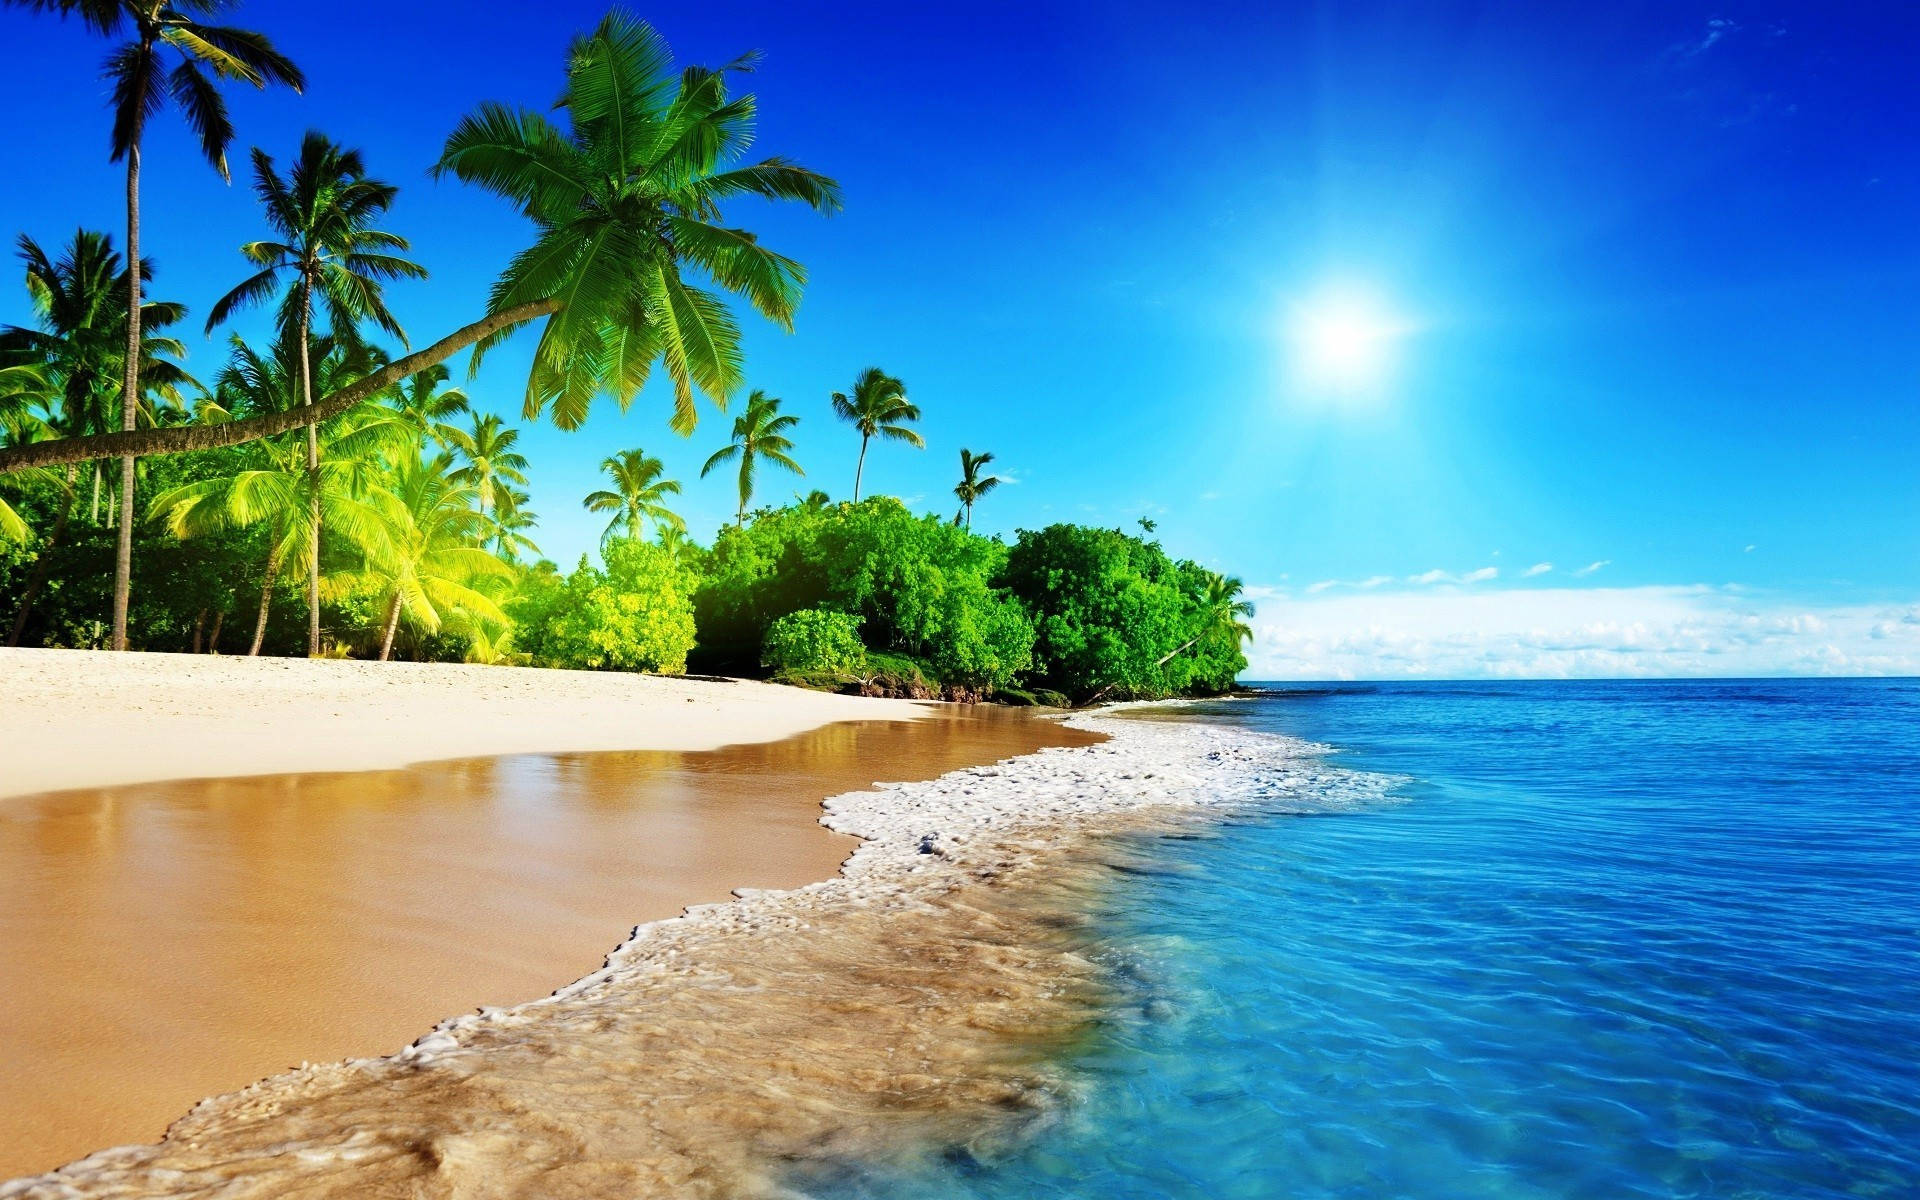 Peaceful Island Summer Season Background